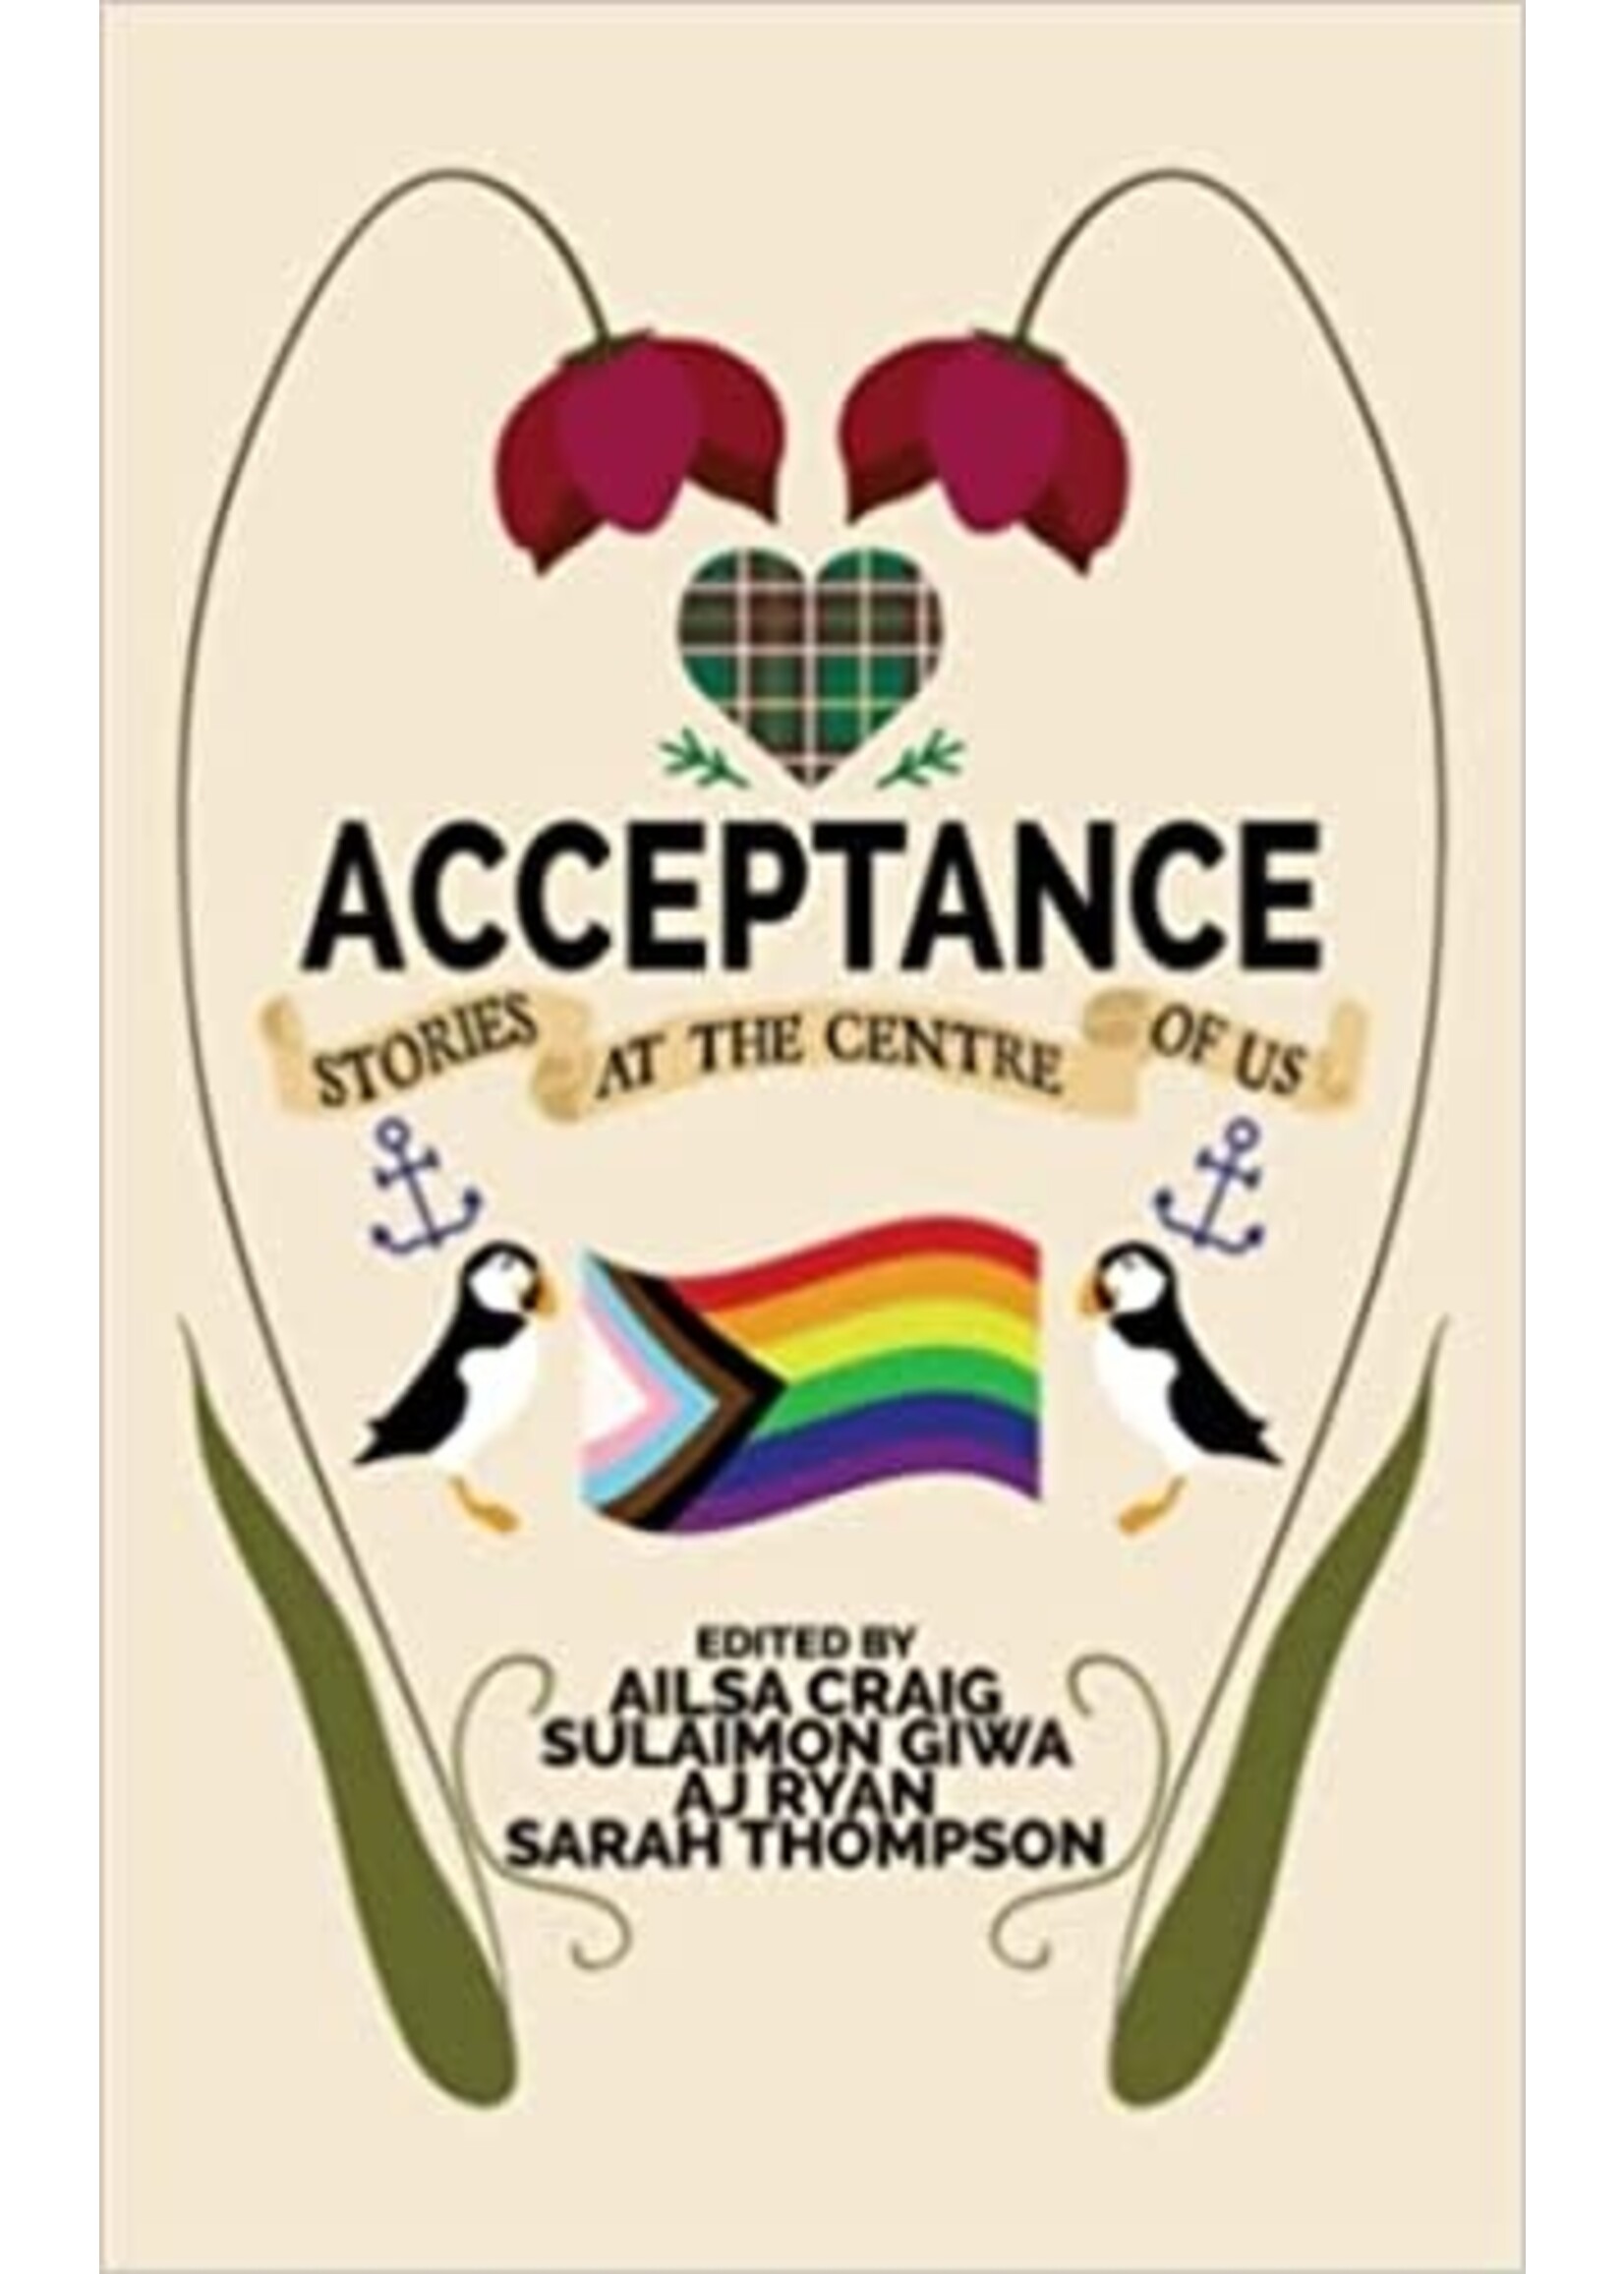 Acceptance by Ailsa Craig, Sulaimon Giwa, Sarah Thompson, A.J. Ryan